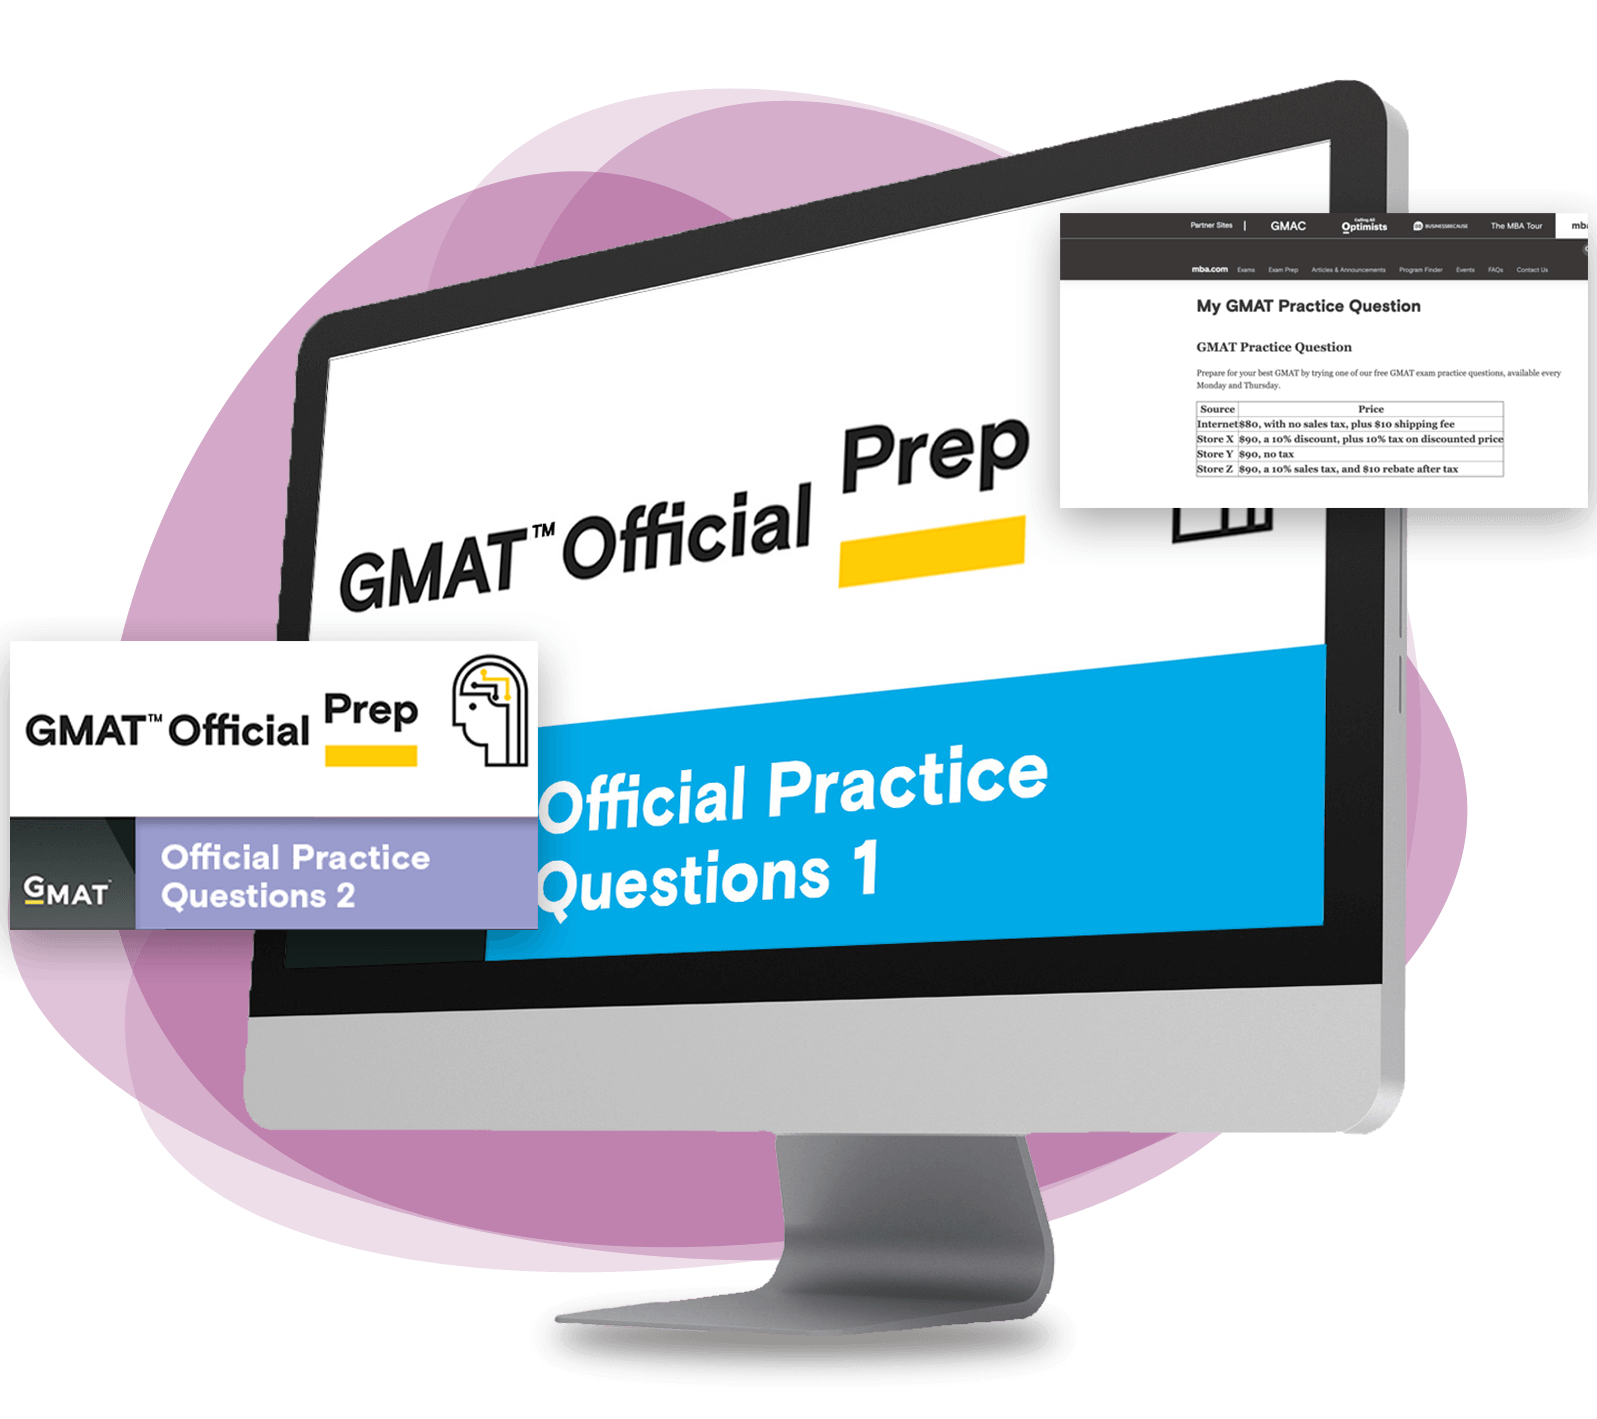 GMAT Test Preparation  GMAT Practice Tests & Exam Prep Online